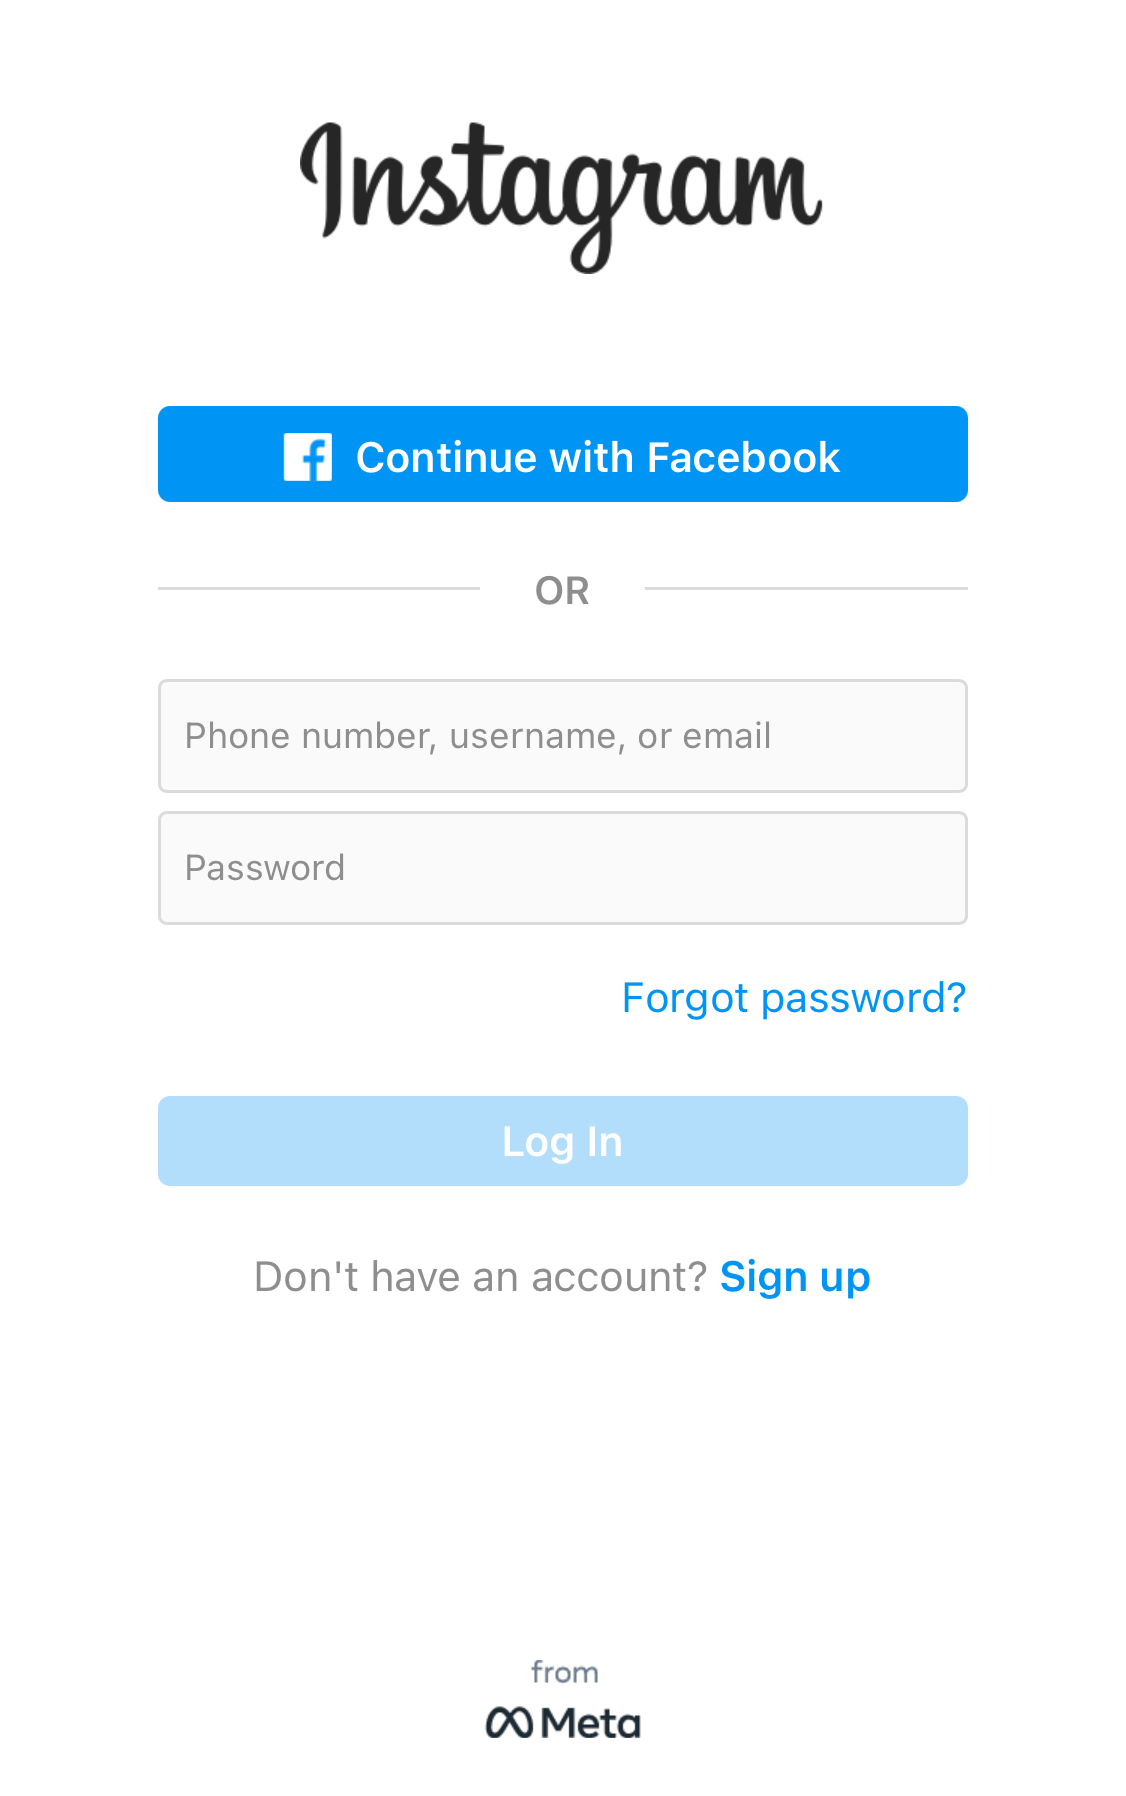 Instagram forgot password page